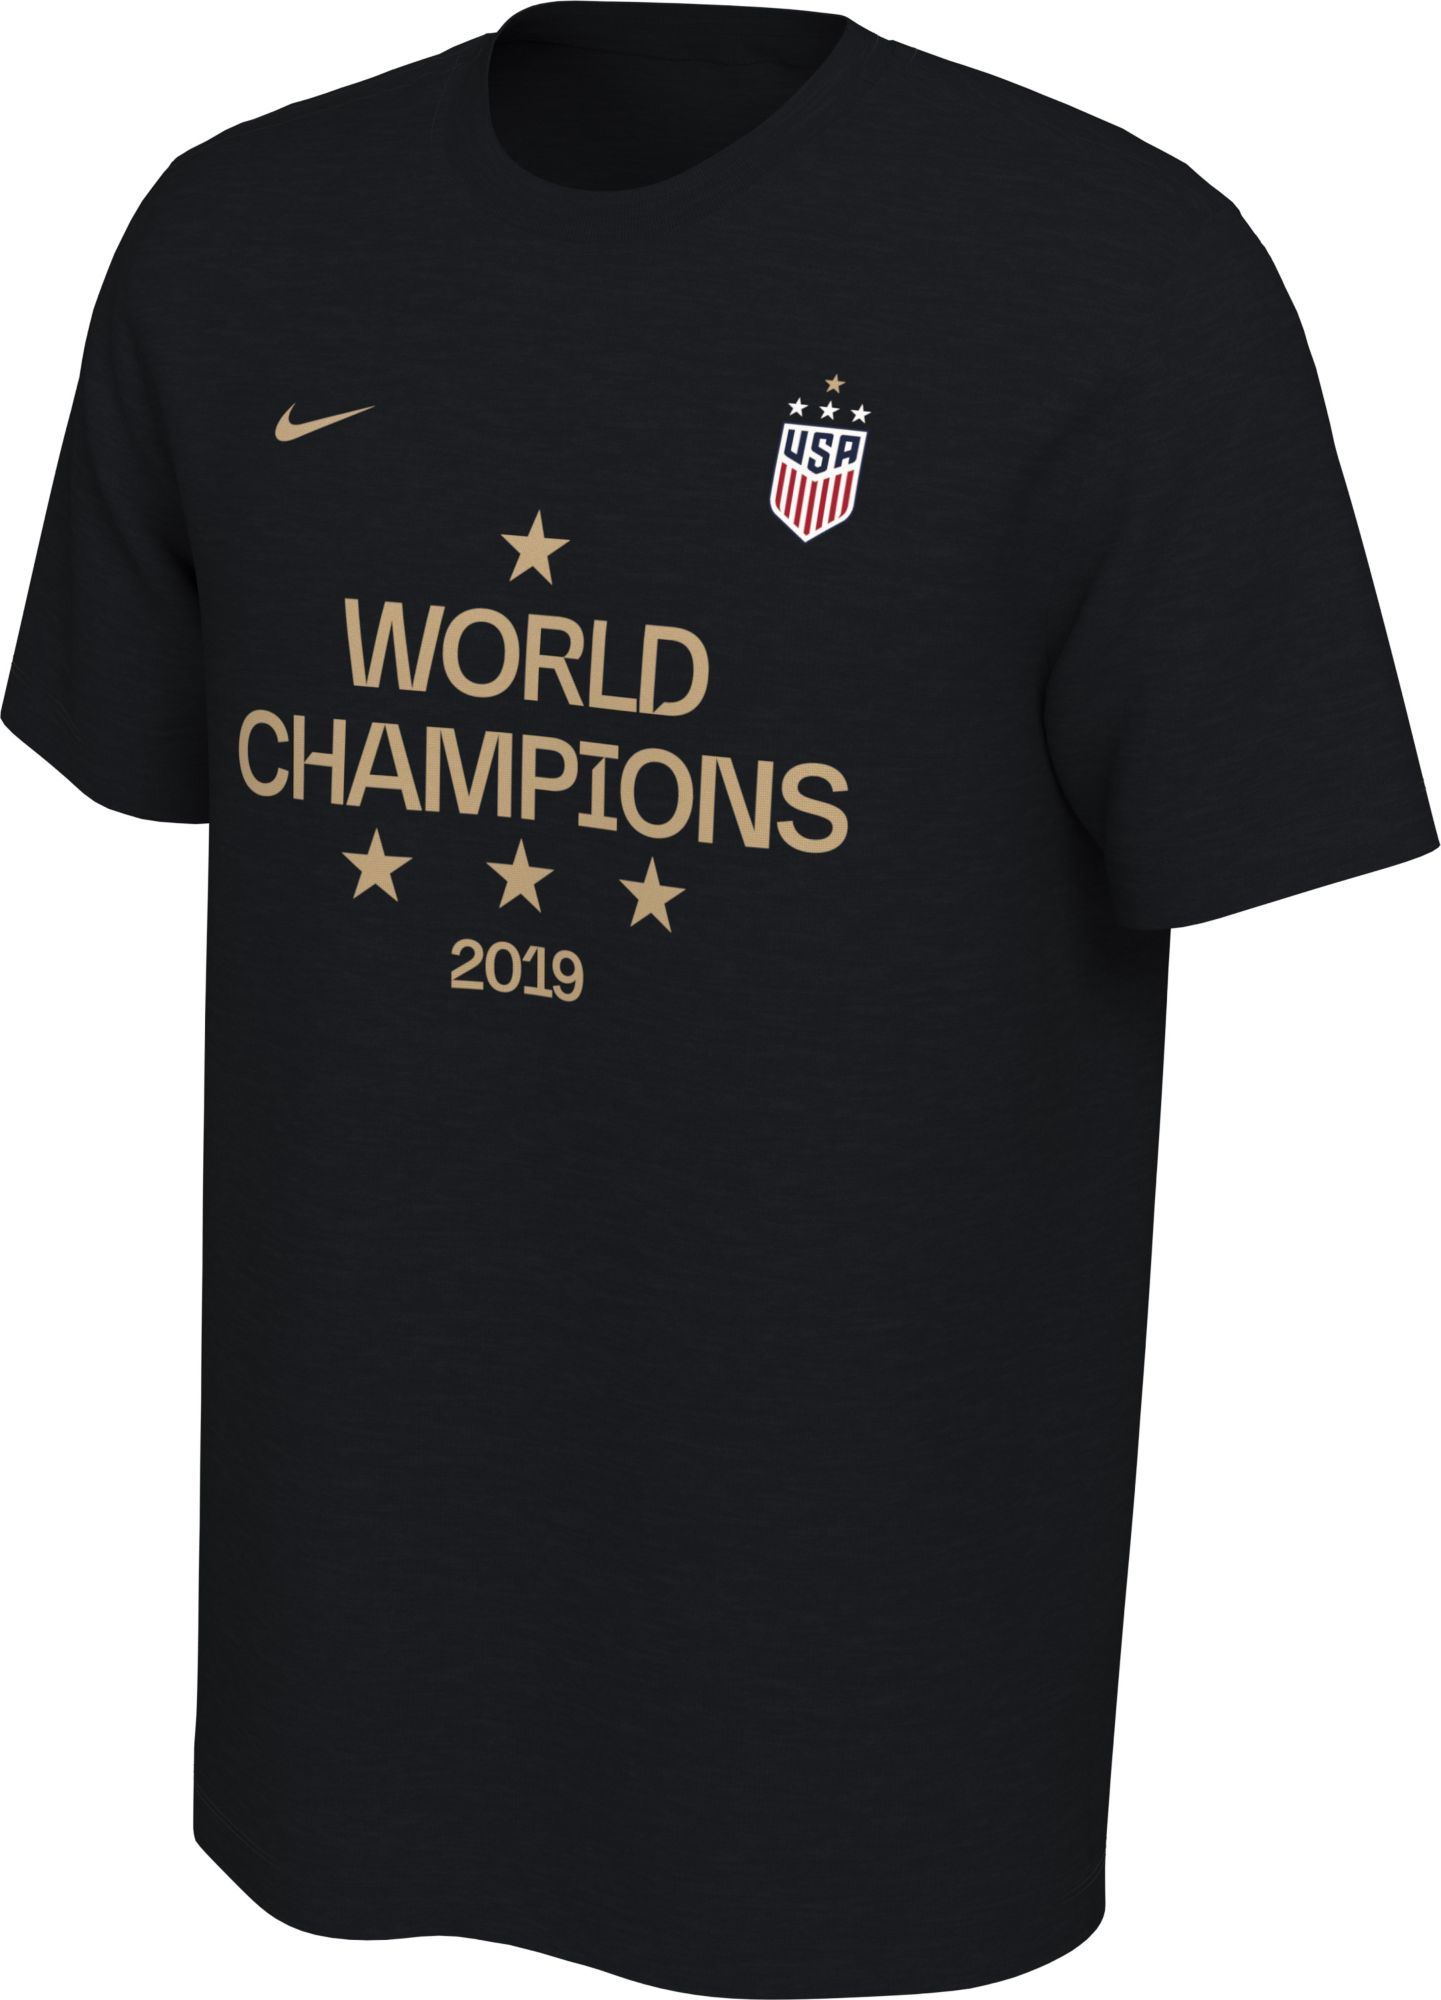 women's world cup championship shirts